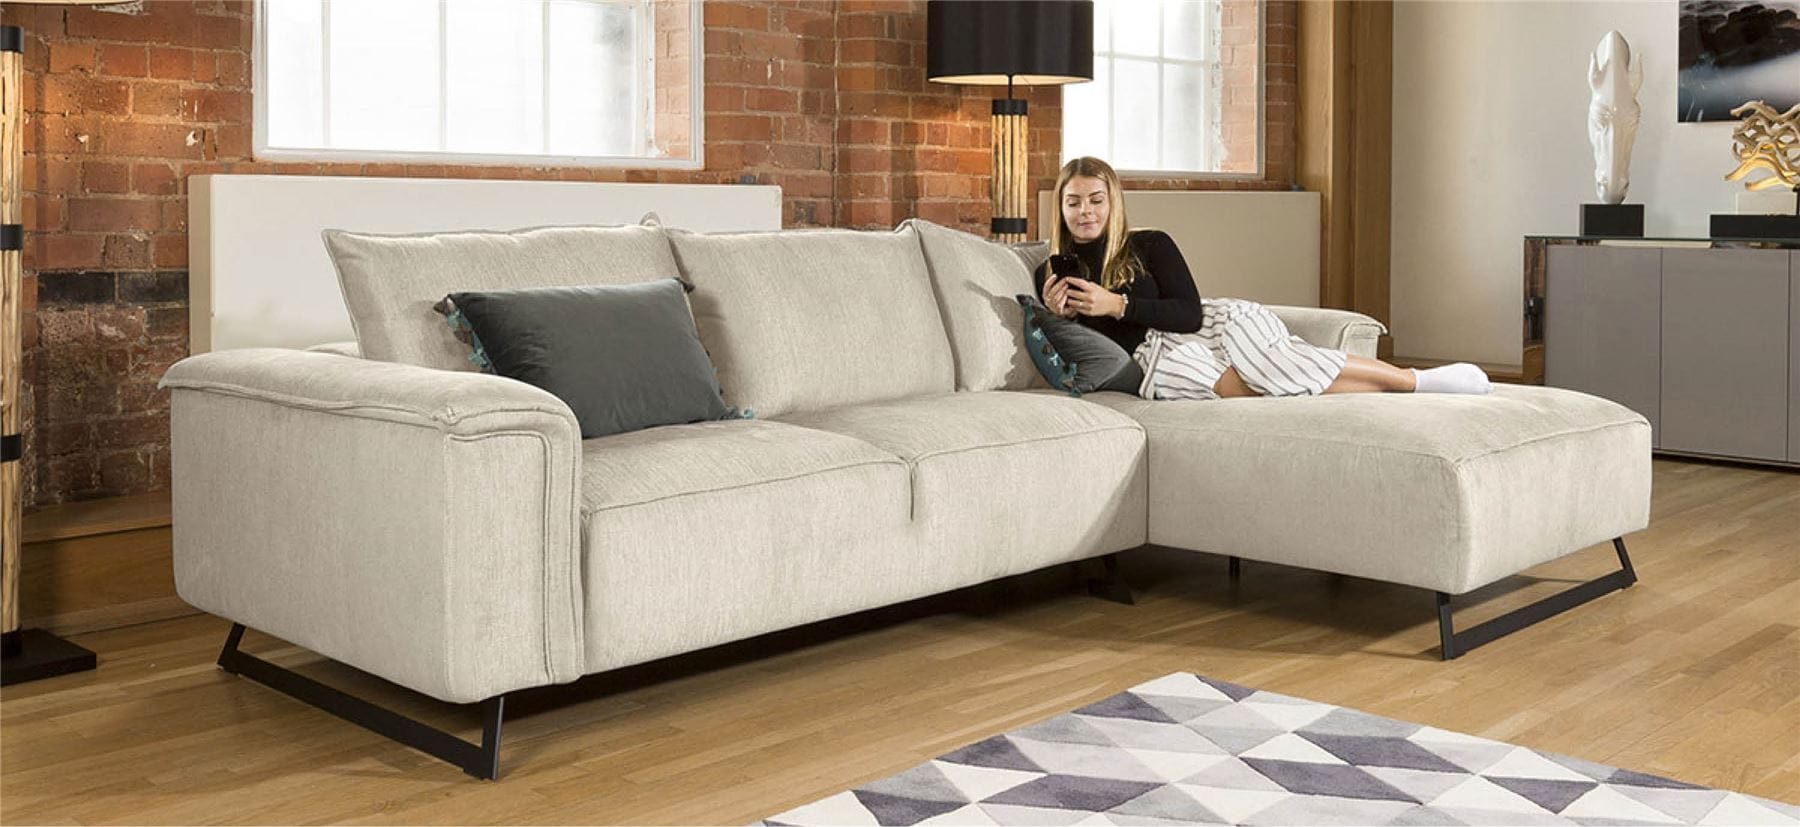 Quatropi Large Luxury Effie L Shaped Sofa with Chaise Many Fabrics 3.0 x 1.9m LH